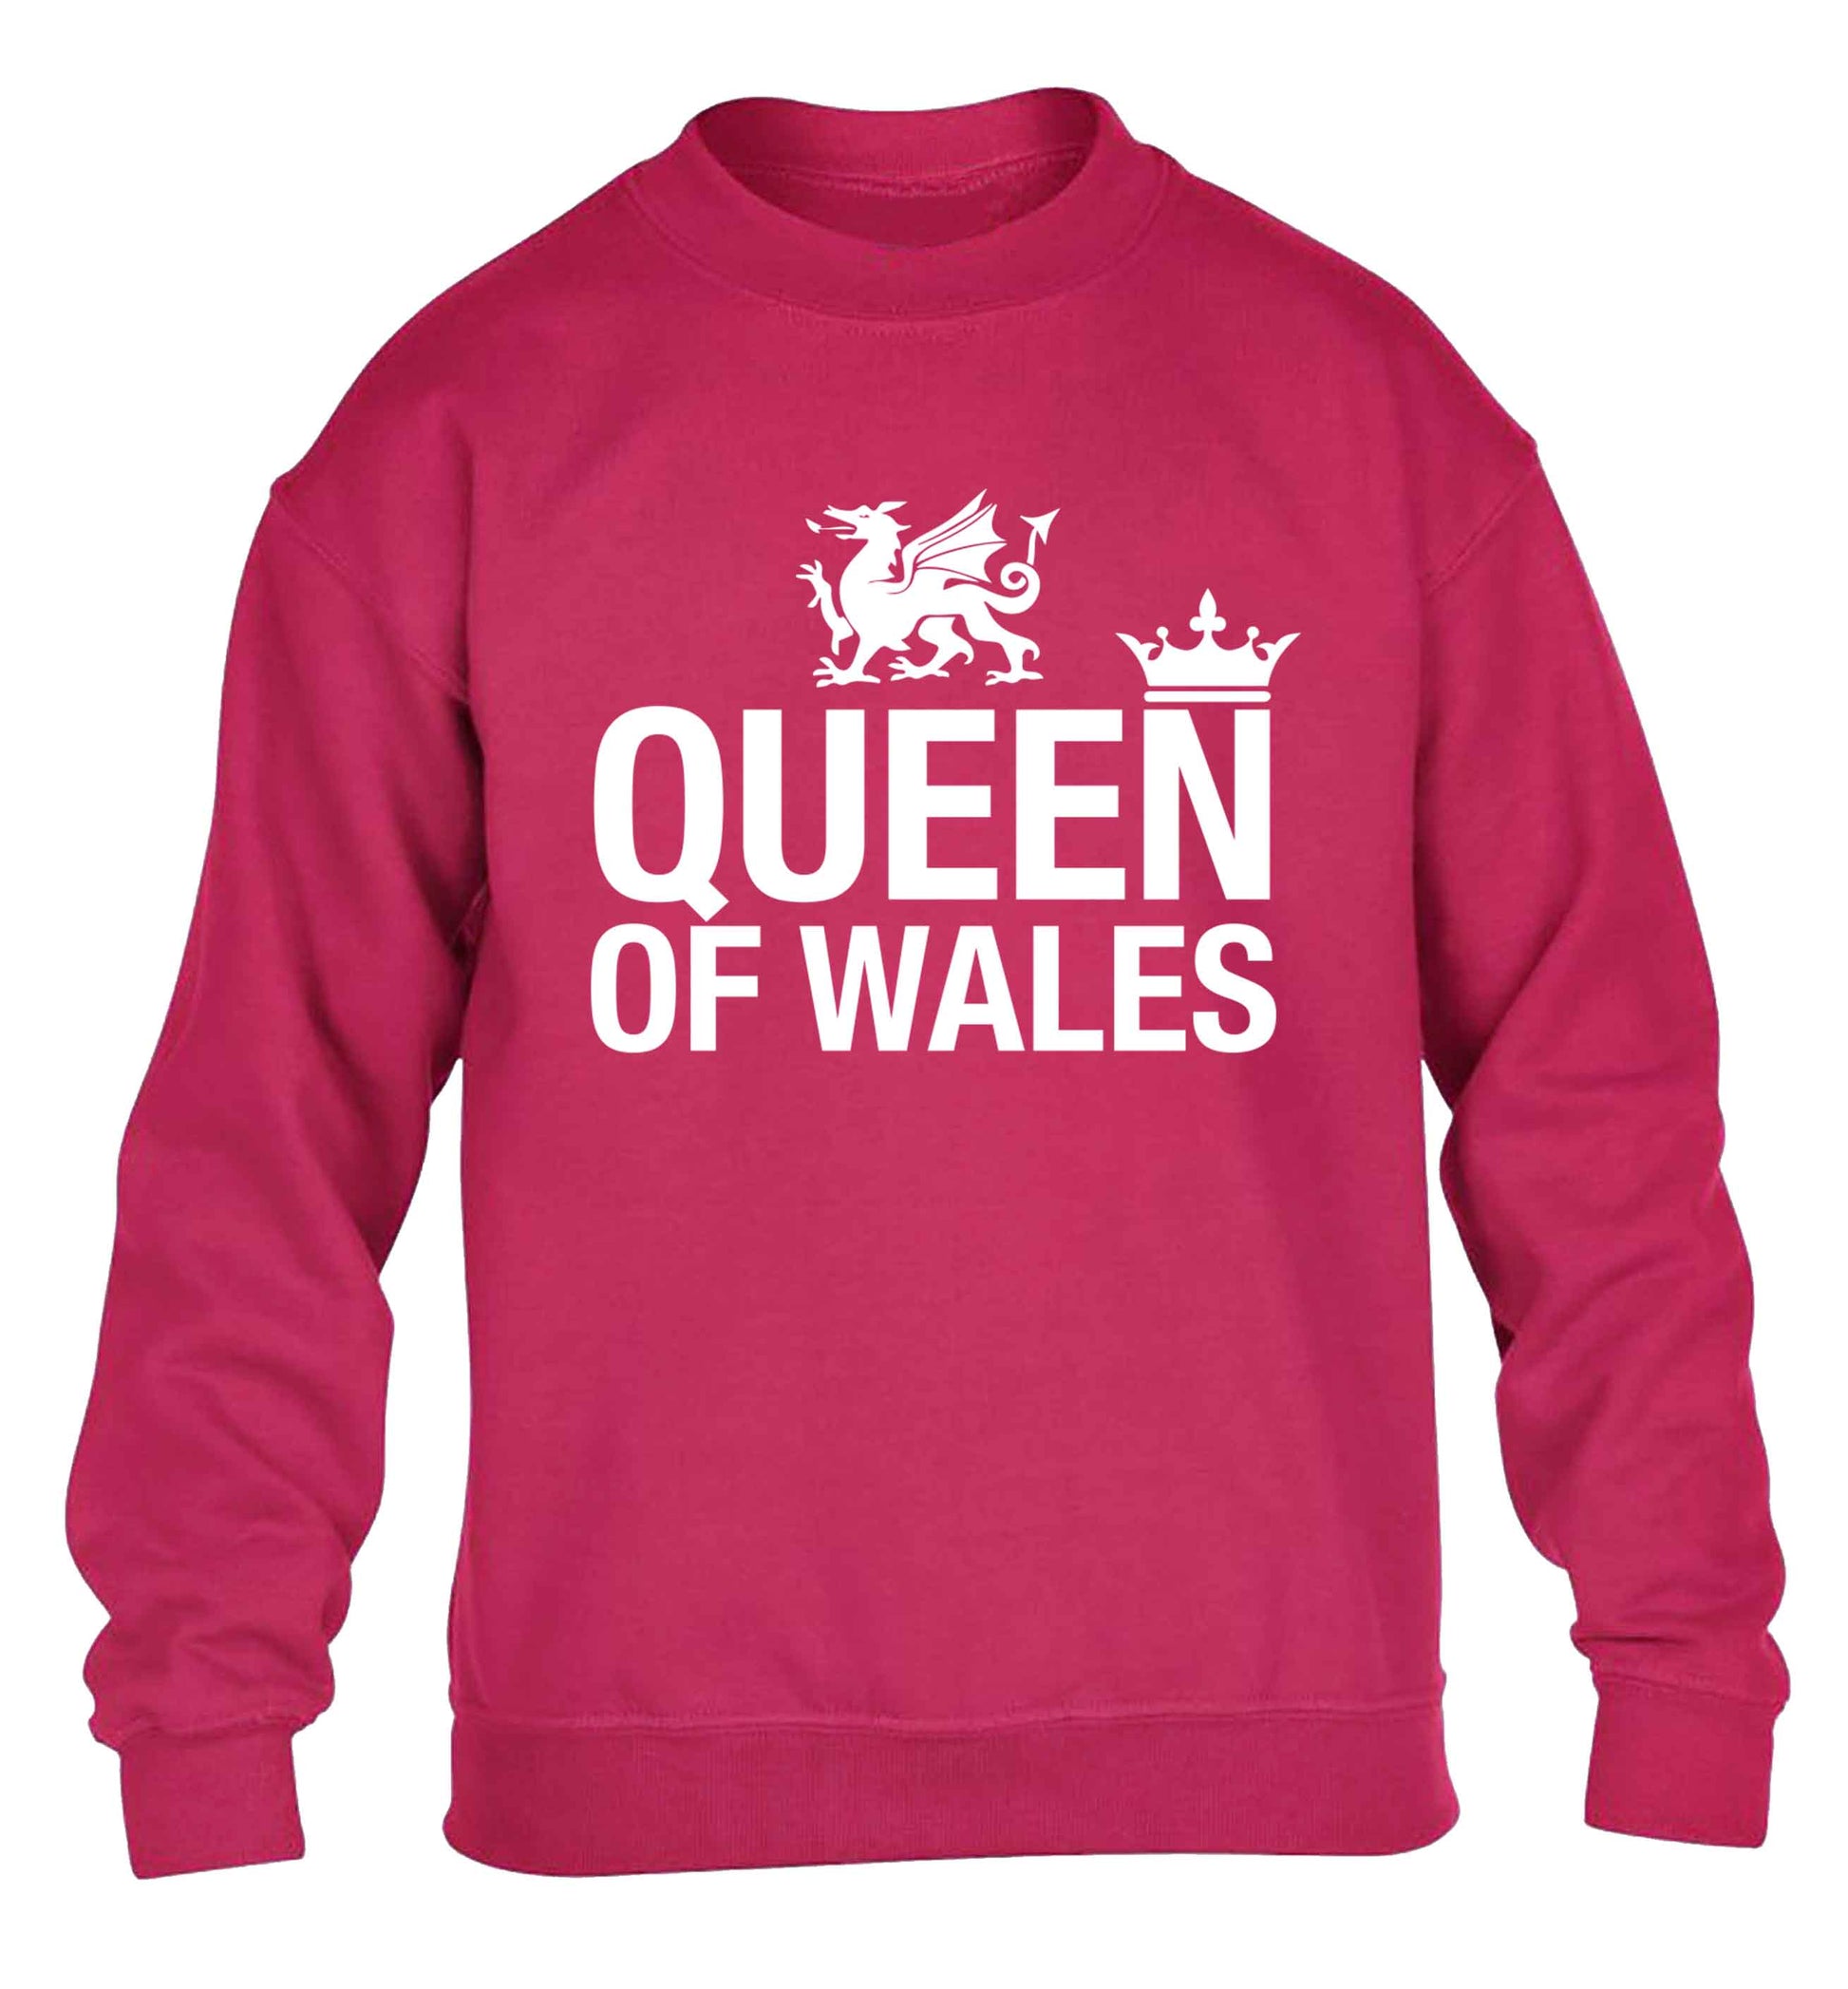 Queen of Wales children's pink sweater 12-13 Years